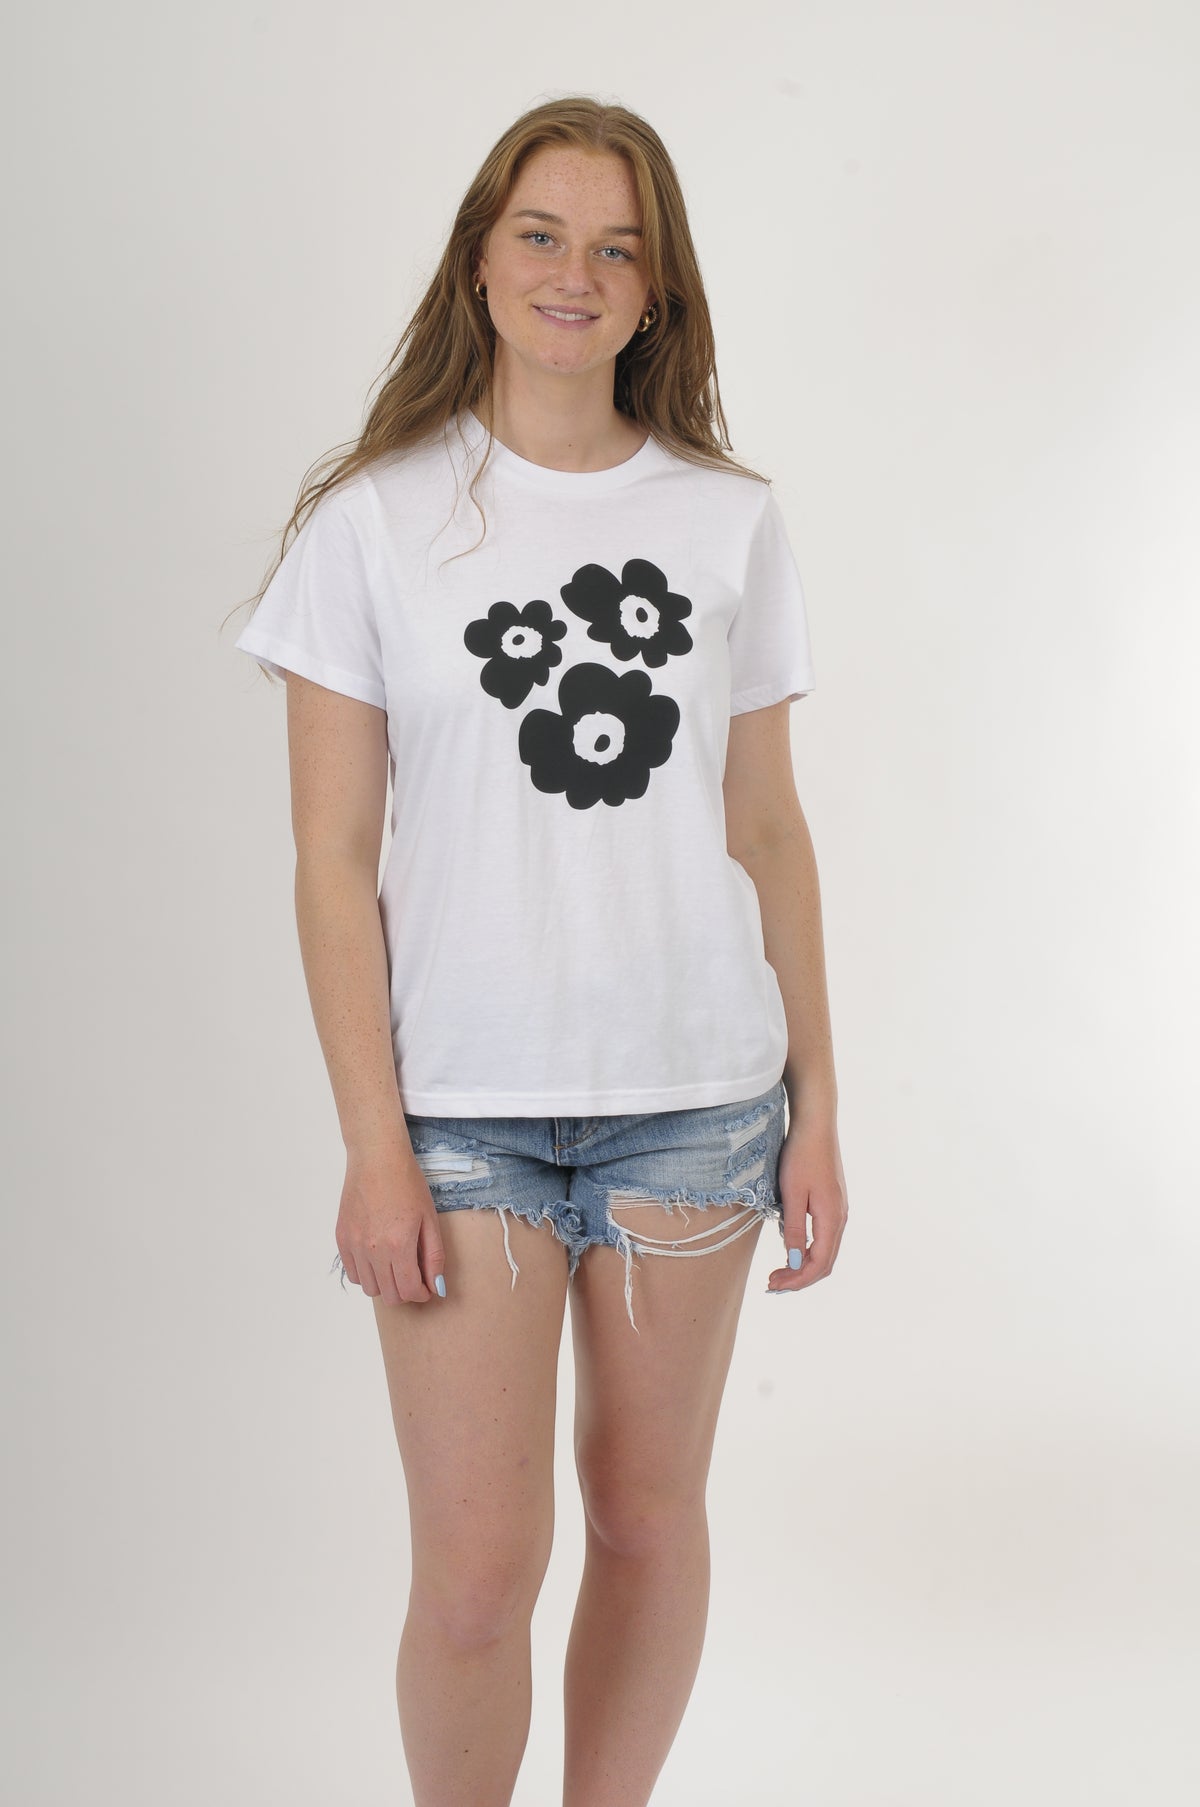 Tee Shirt - White with black 3 flower Print - Wadzee Print - Pre Order